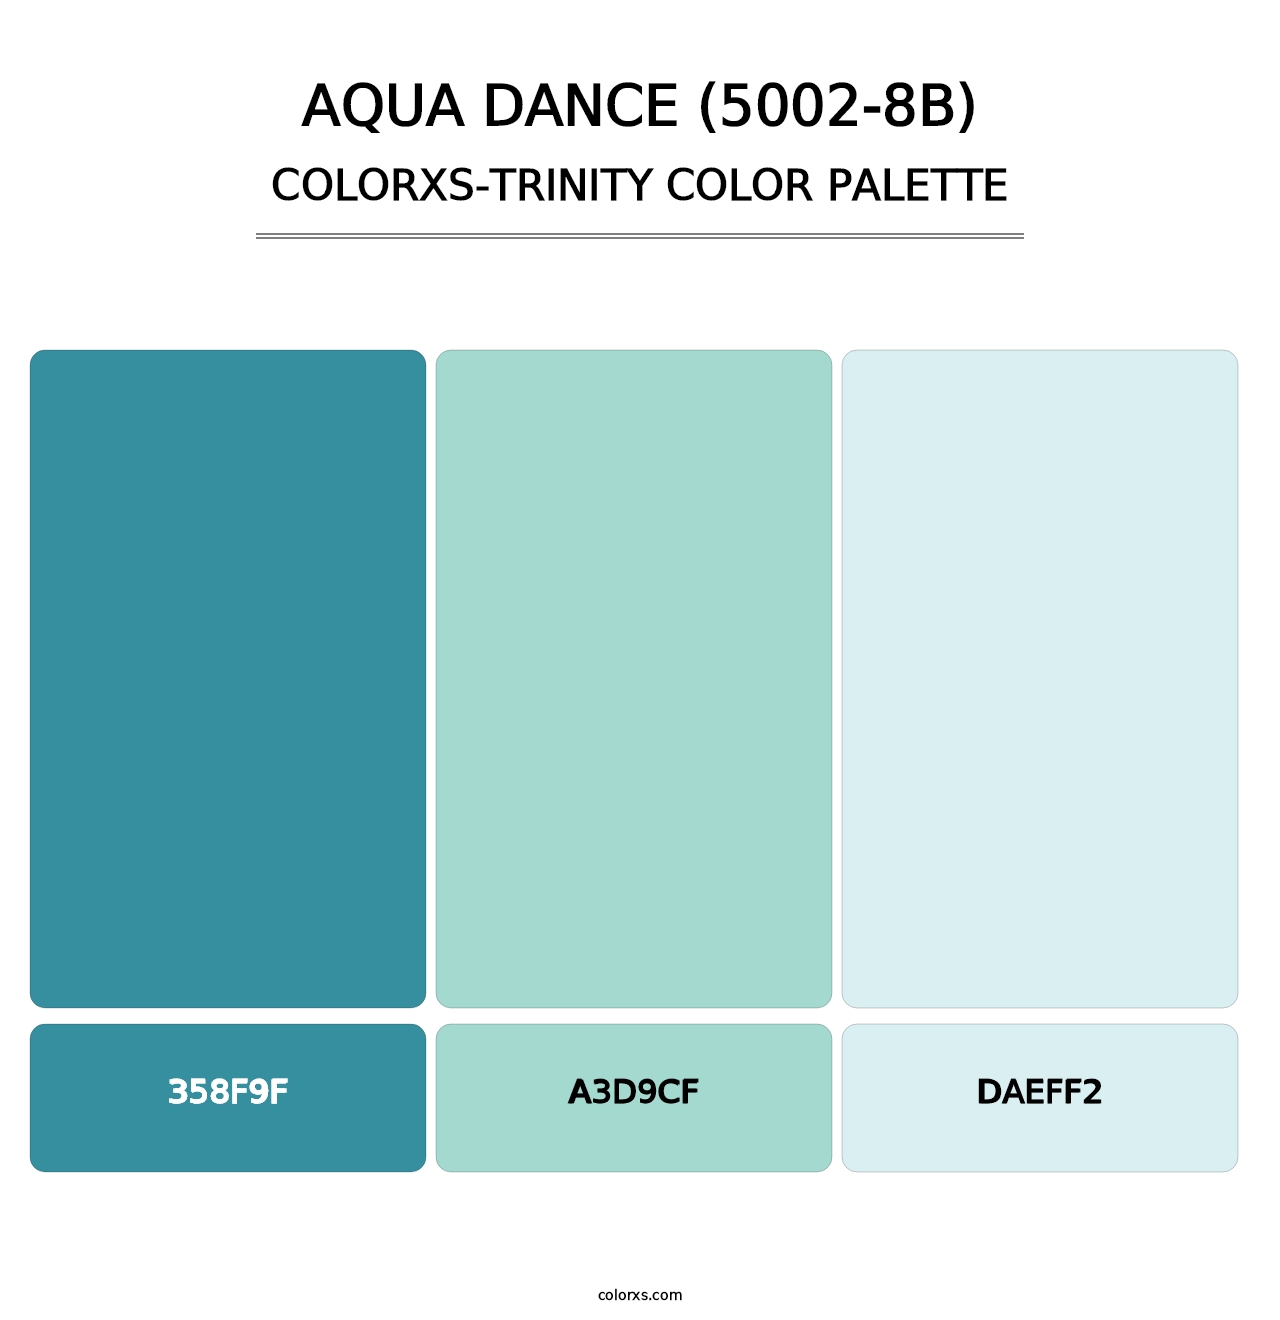 Aqua Dance (5002-8B) - Colorxs Trinity Palette